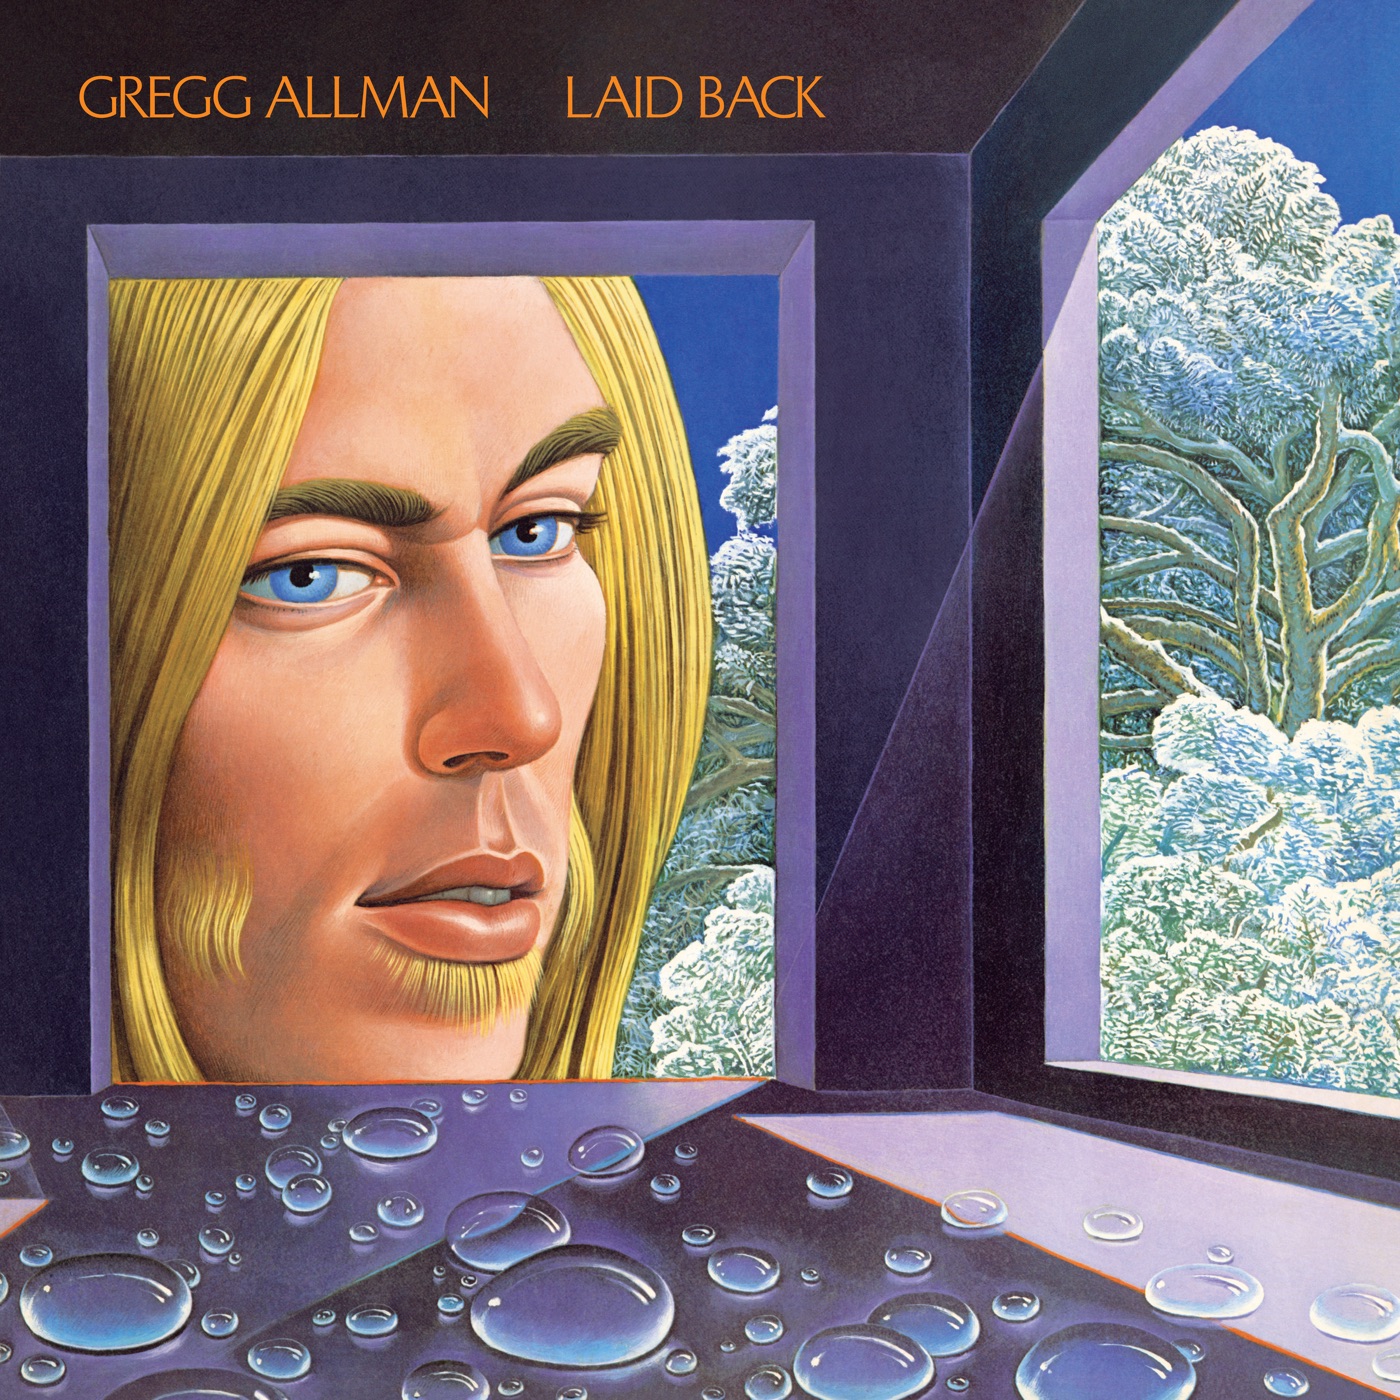 Laid Back by Gregg Allman, Laid Back